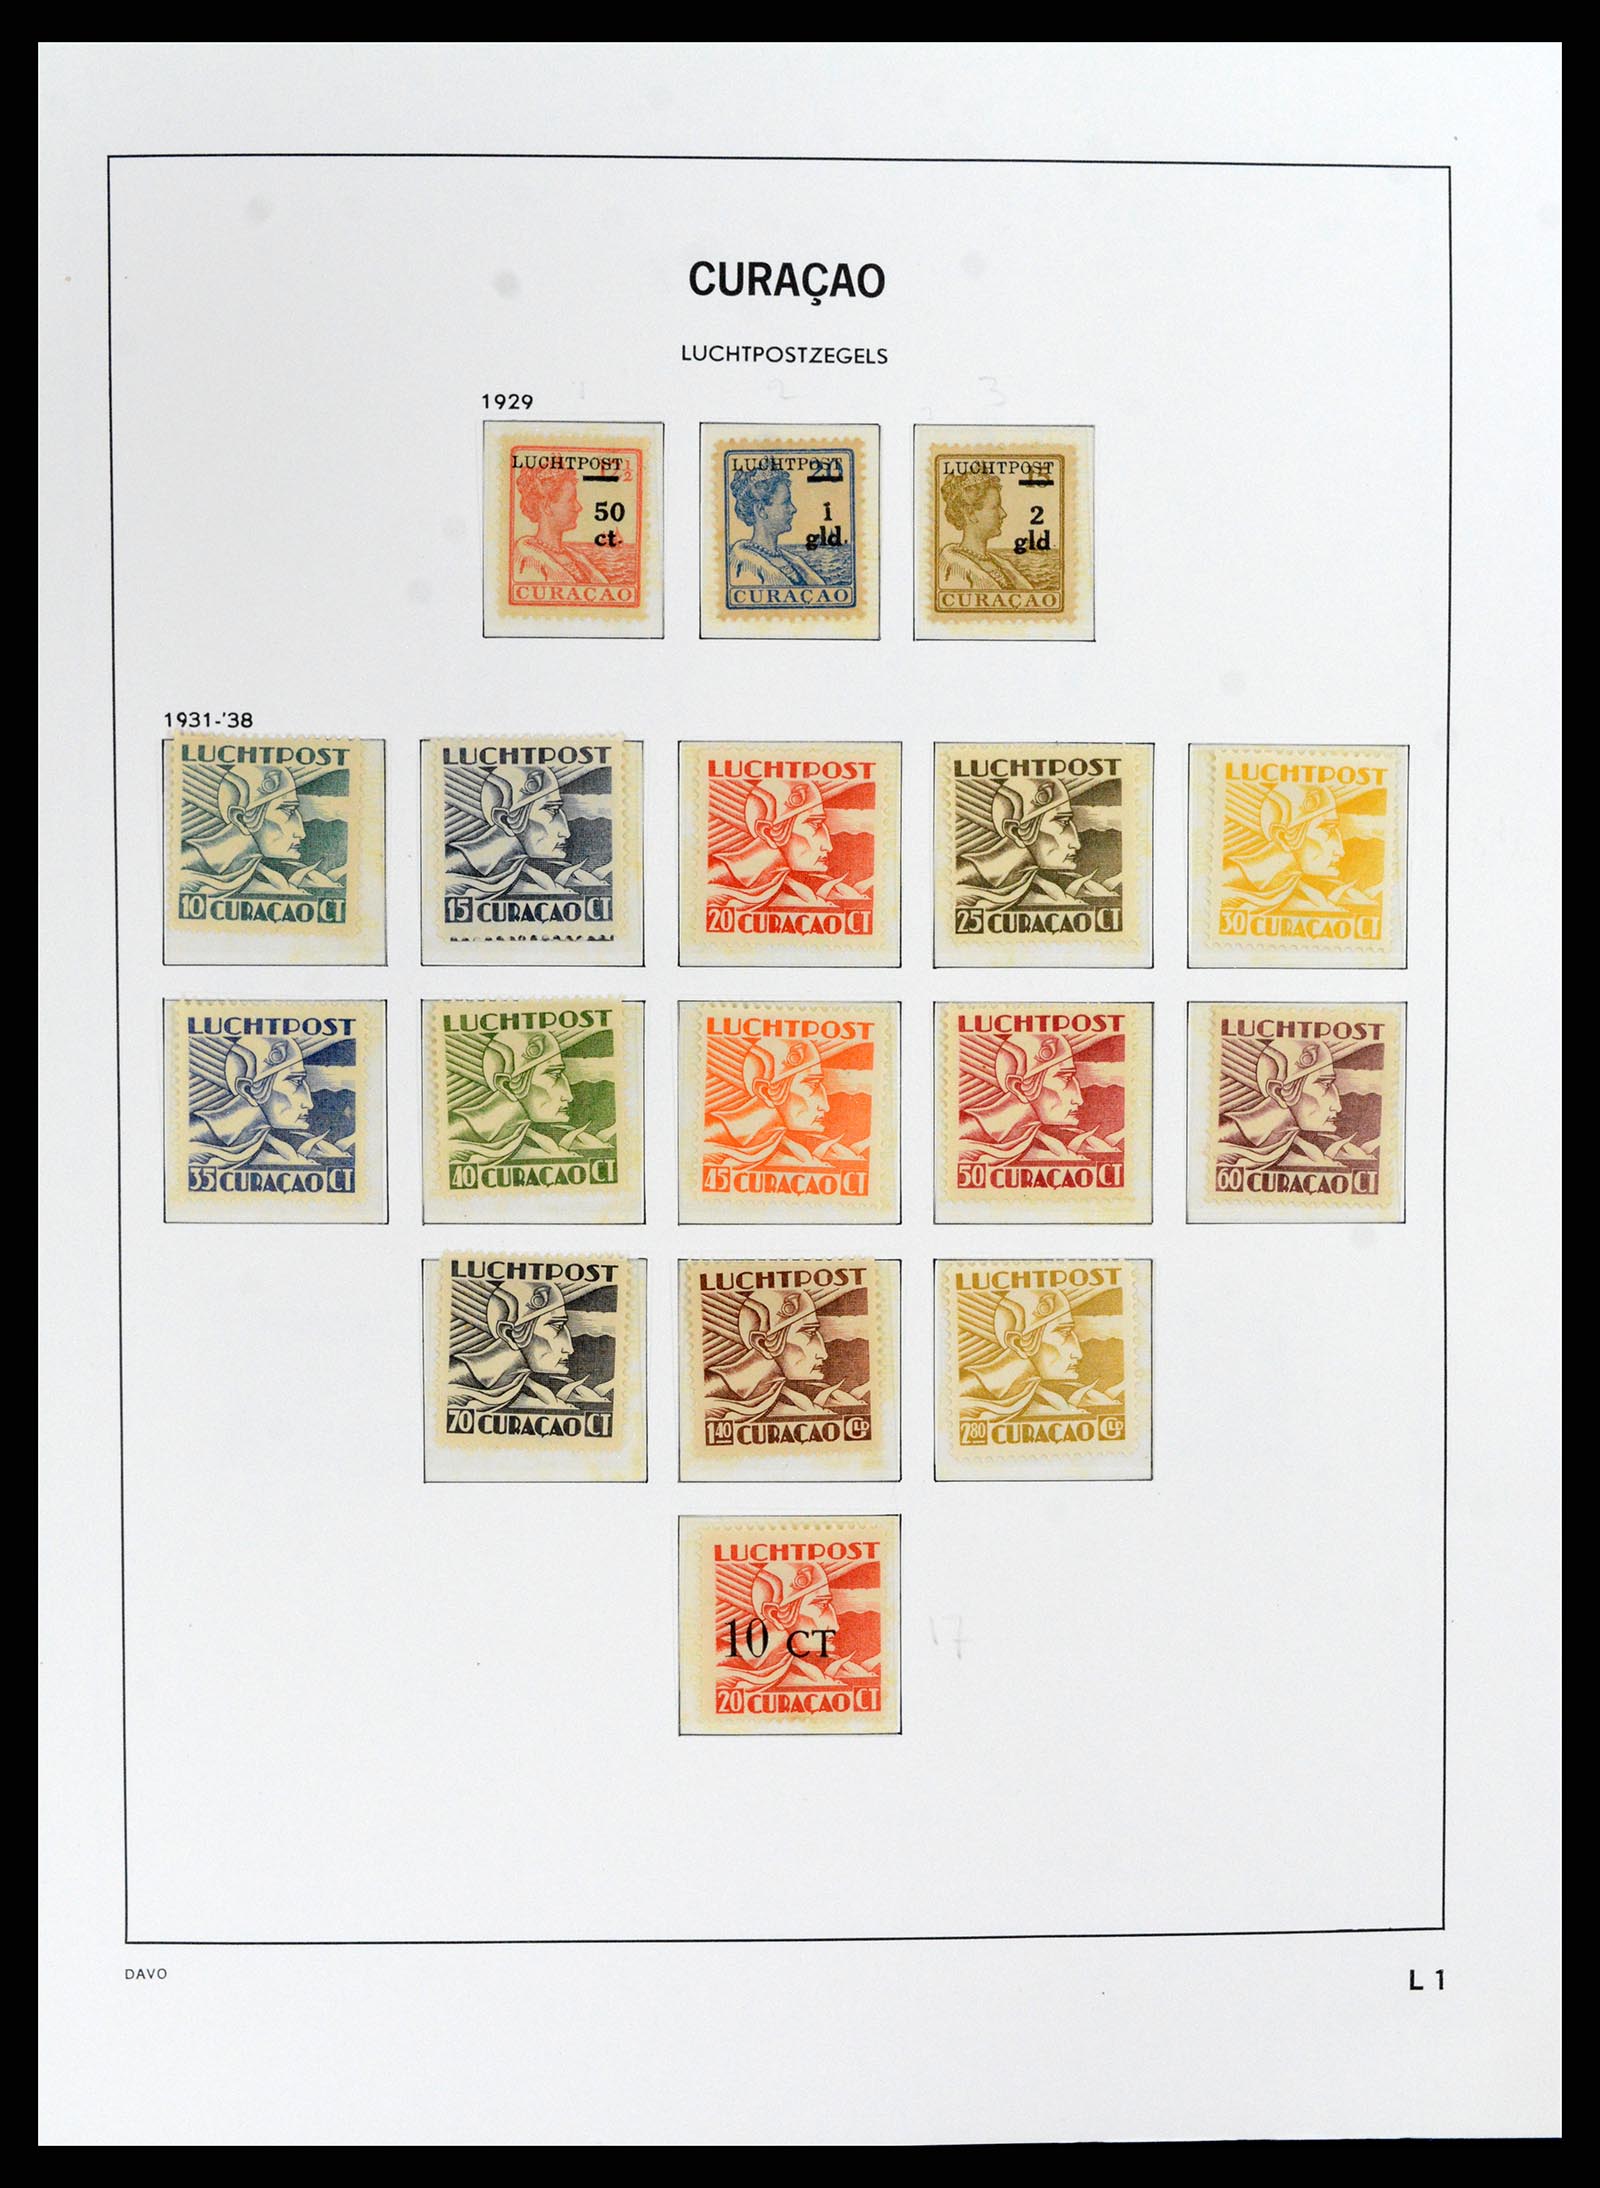 37844 061 - Stamp Collection 37844 Curaçao/Antilles 1873-2010.